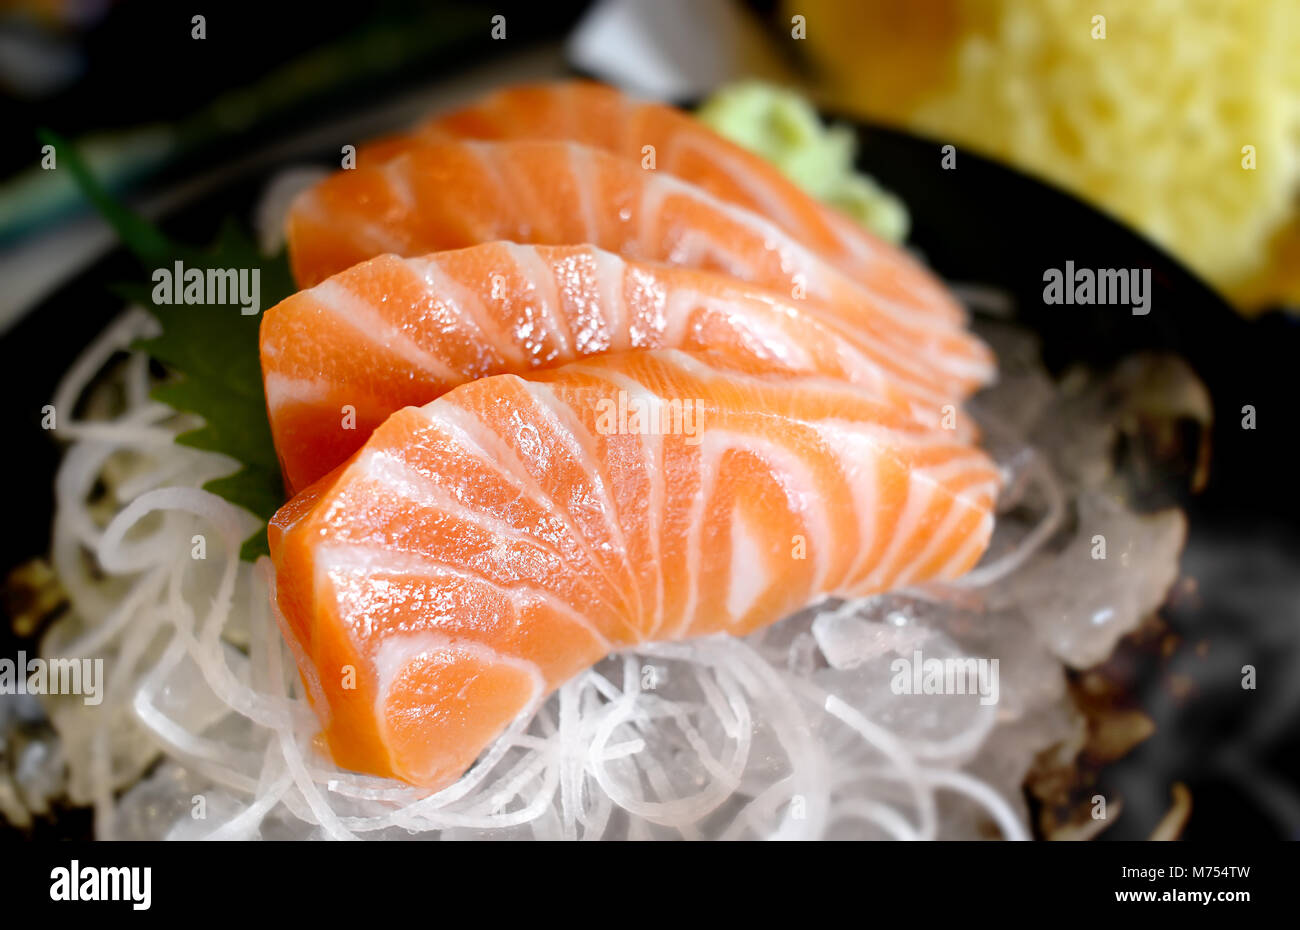 Raw salmon slice or salmon sashimi in Japanese style fresh serve on ice with fresh wasabi photo in  indoor low lighting. Stock Photo